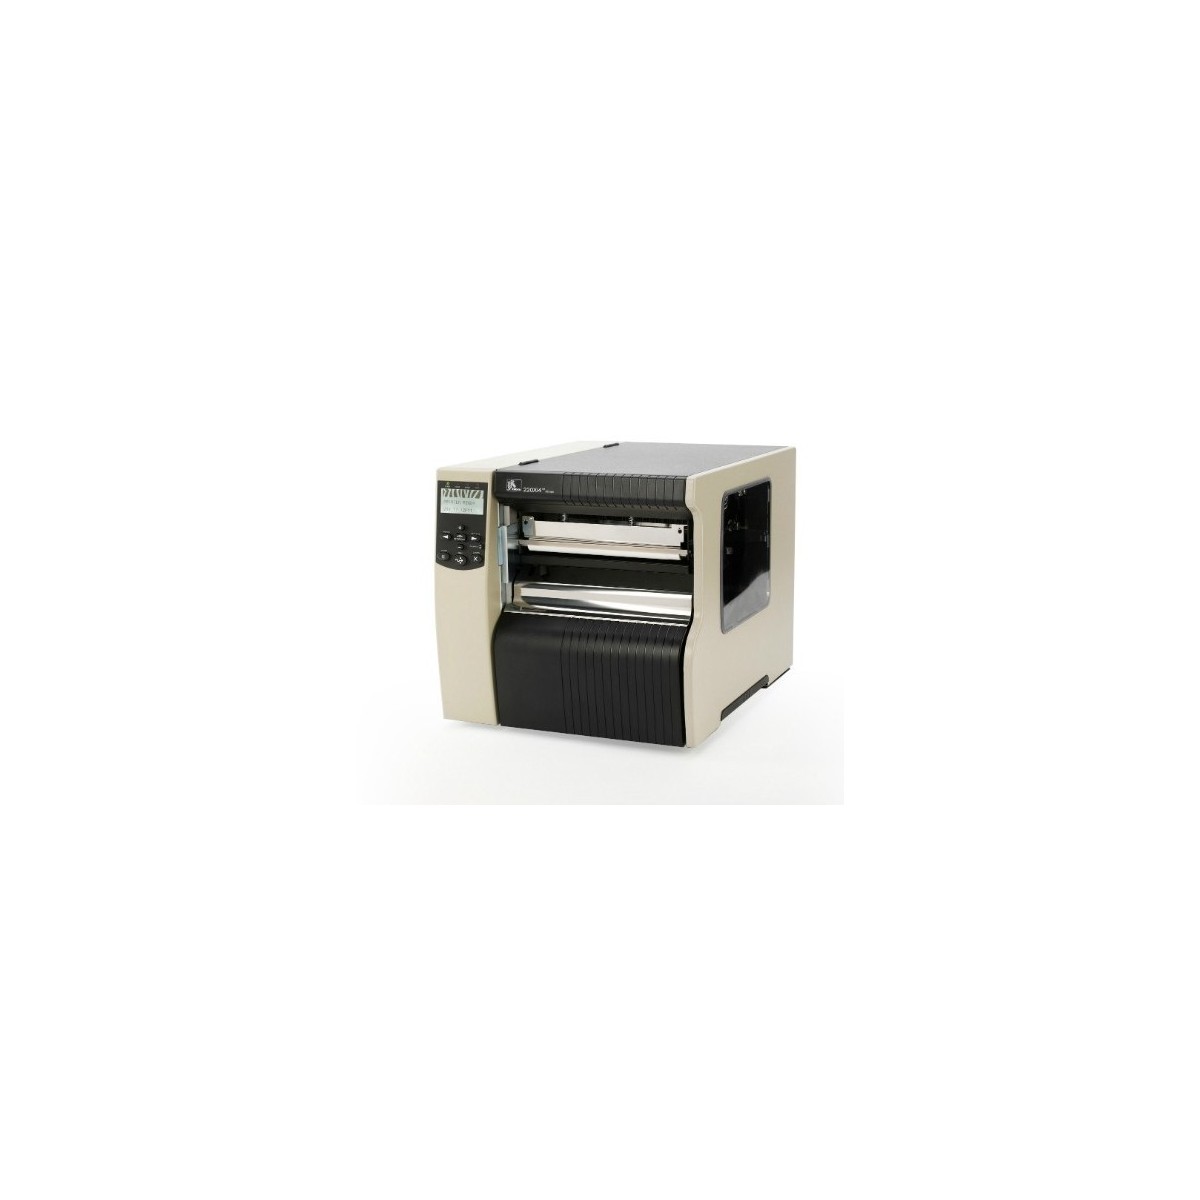 TT Printer 220Xi4 300dpi, Euro- UK cord, Swiss 721 font, Serial, Parallel, USB, Int 10-100, Bifold Media Door